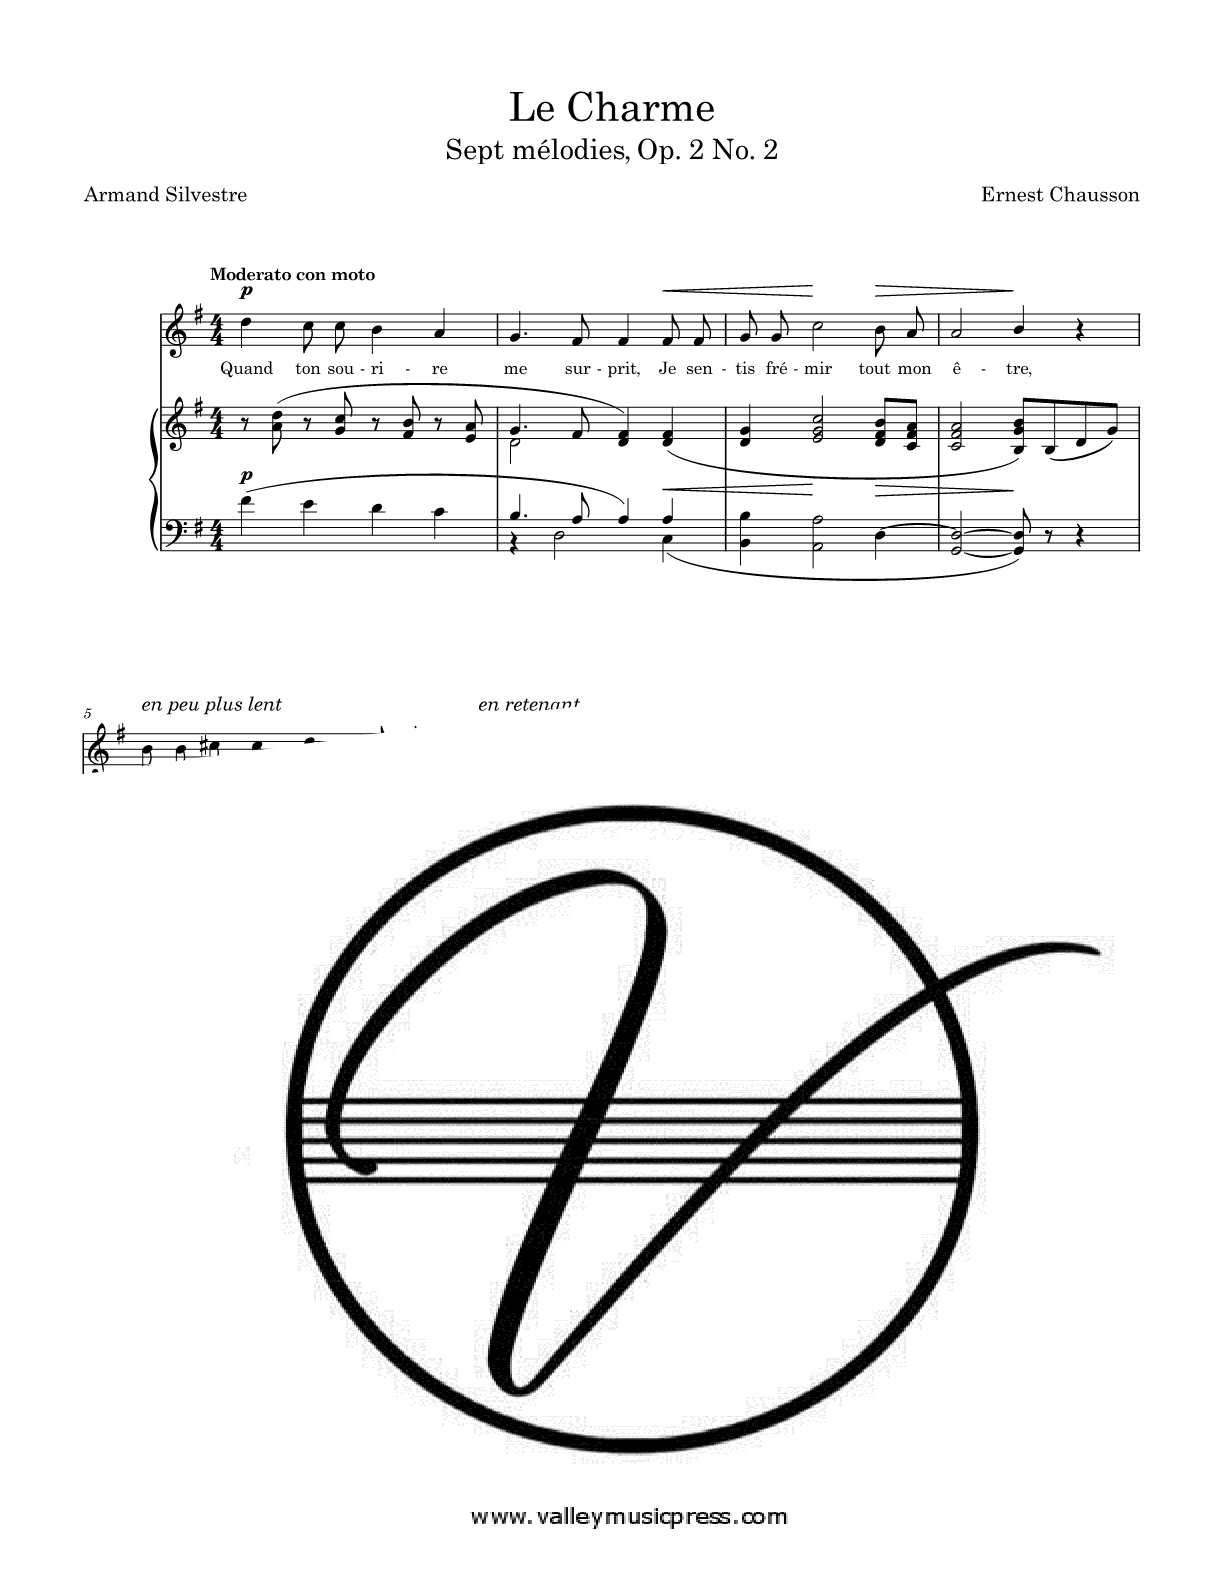 Chausson - Le Charme Op. 2 No. 2 (Voice) - Click Image to Close